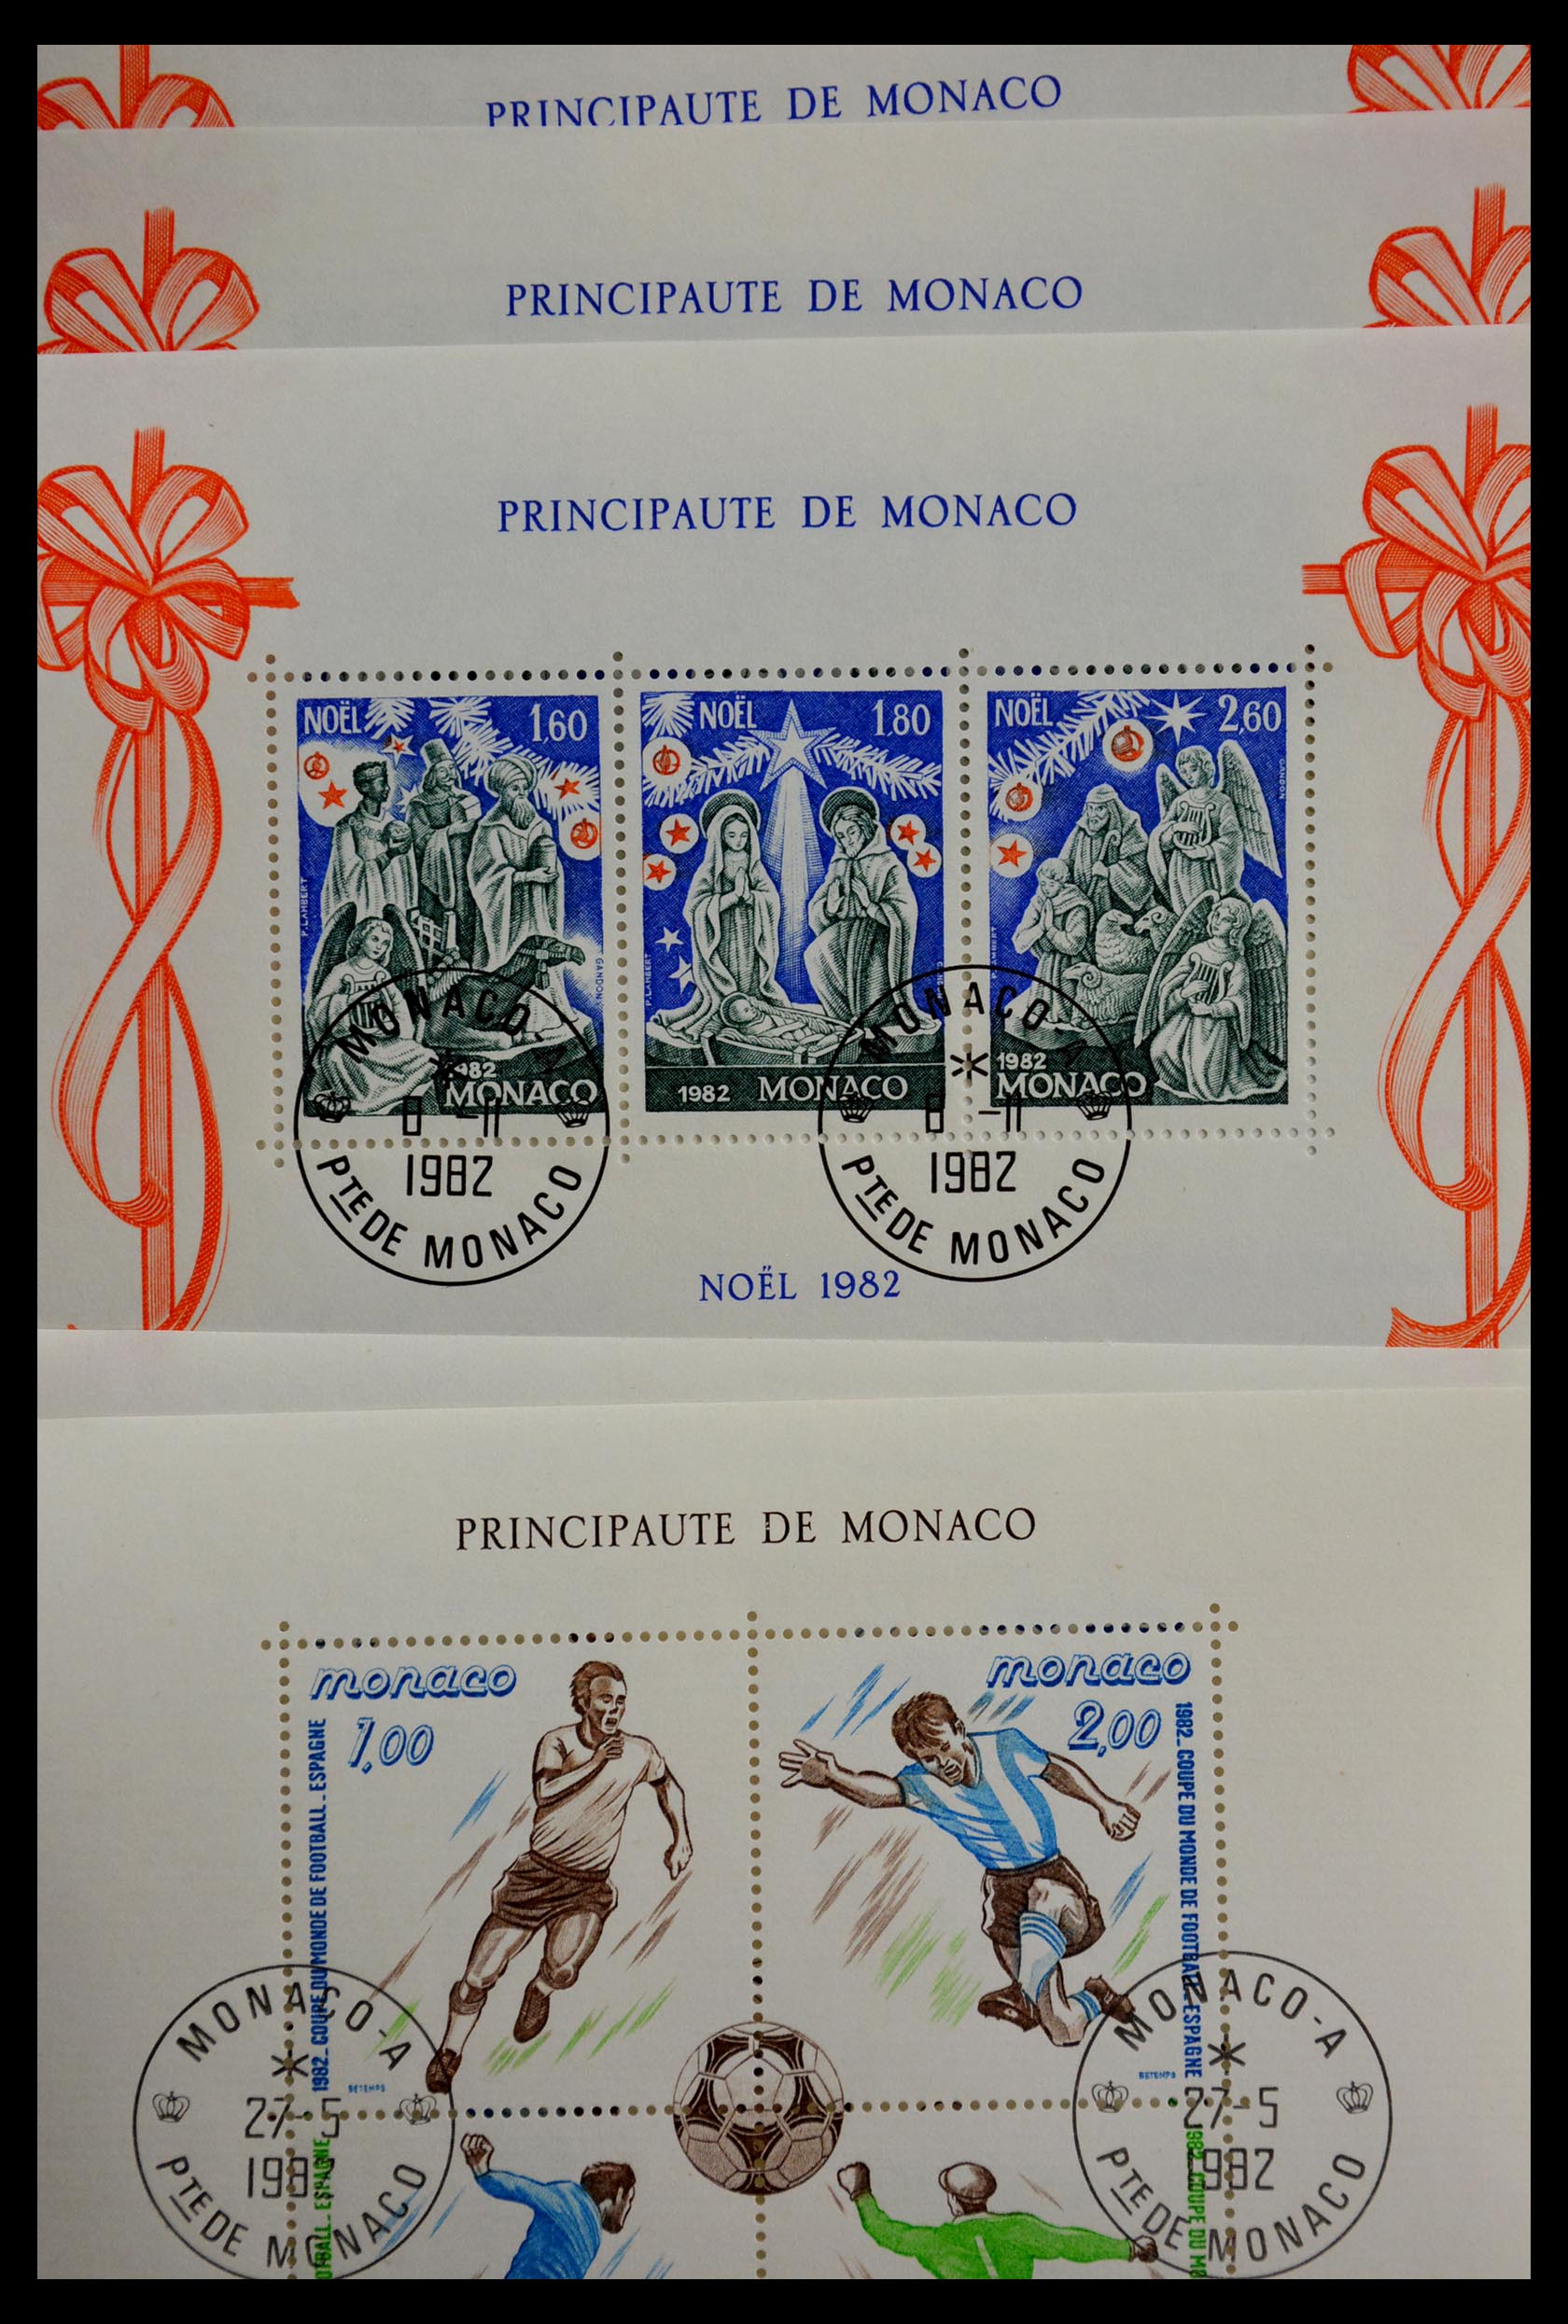 28986 081 - 28986 Souvenir sheets Western Europe.